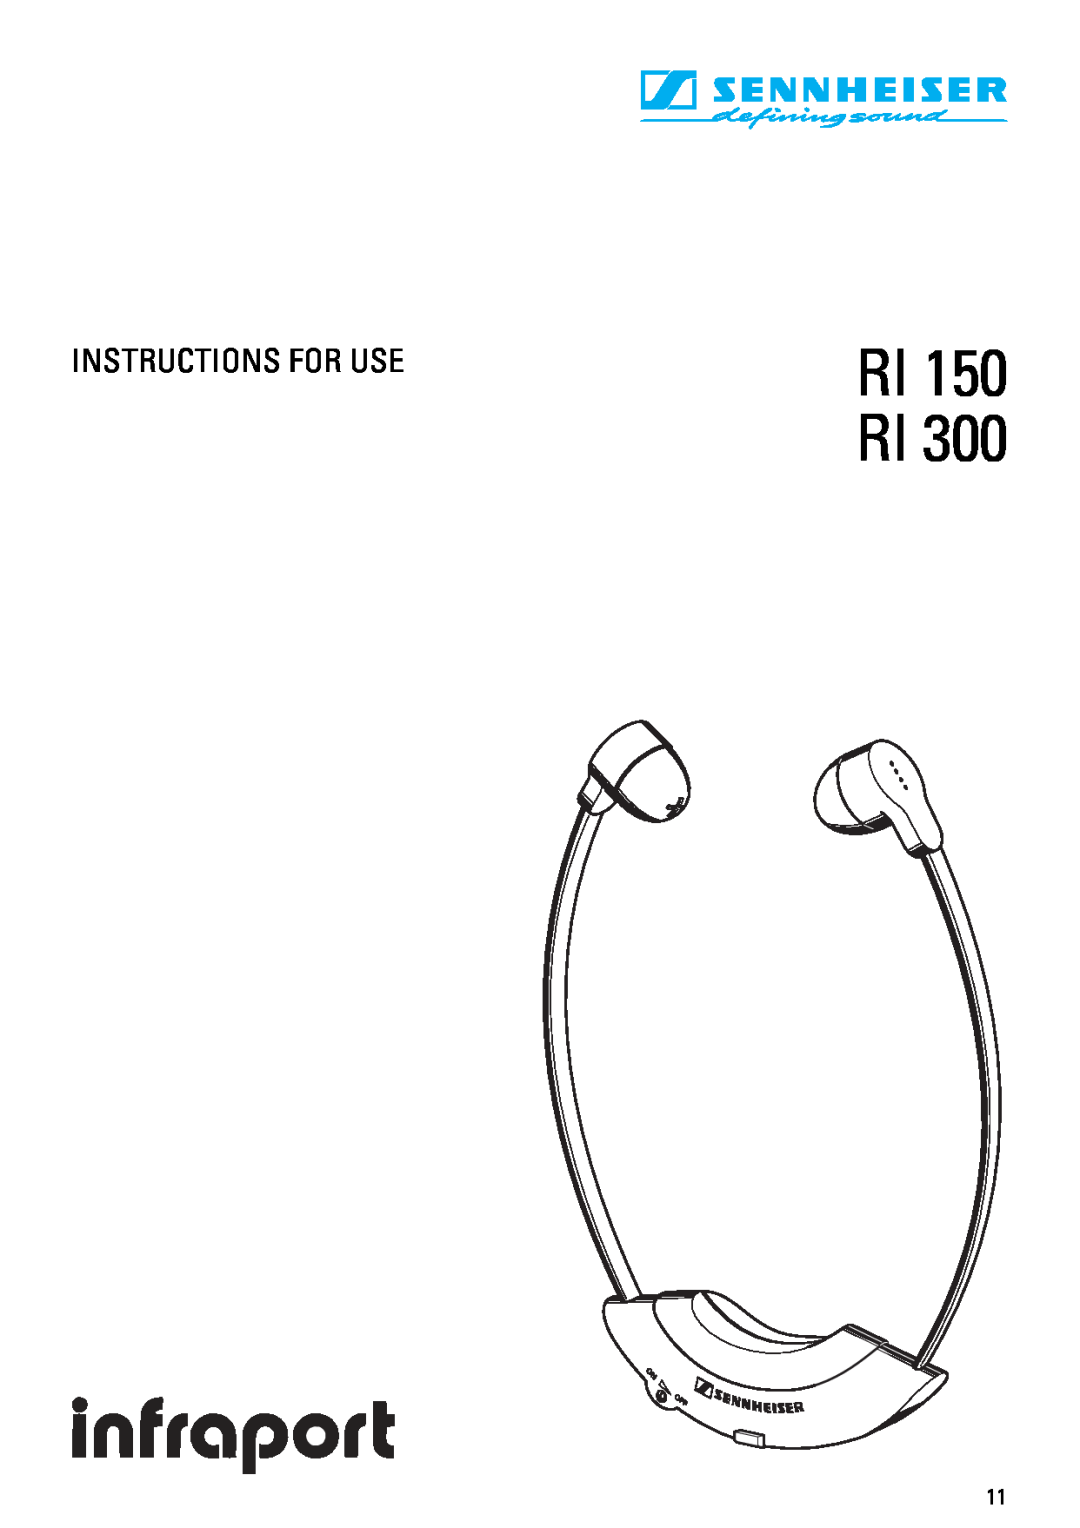 Sennheiser RI 300 manual Instructions For Use, RI 150 RI 